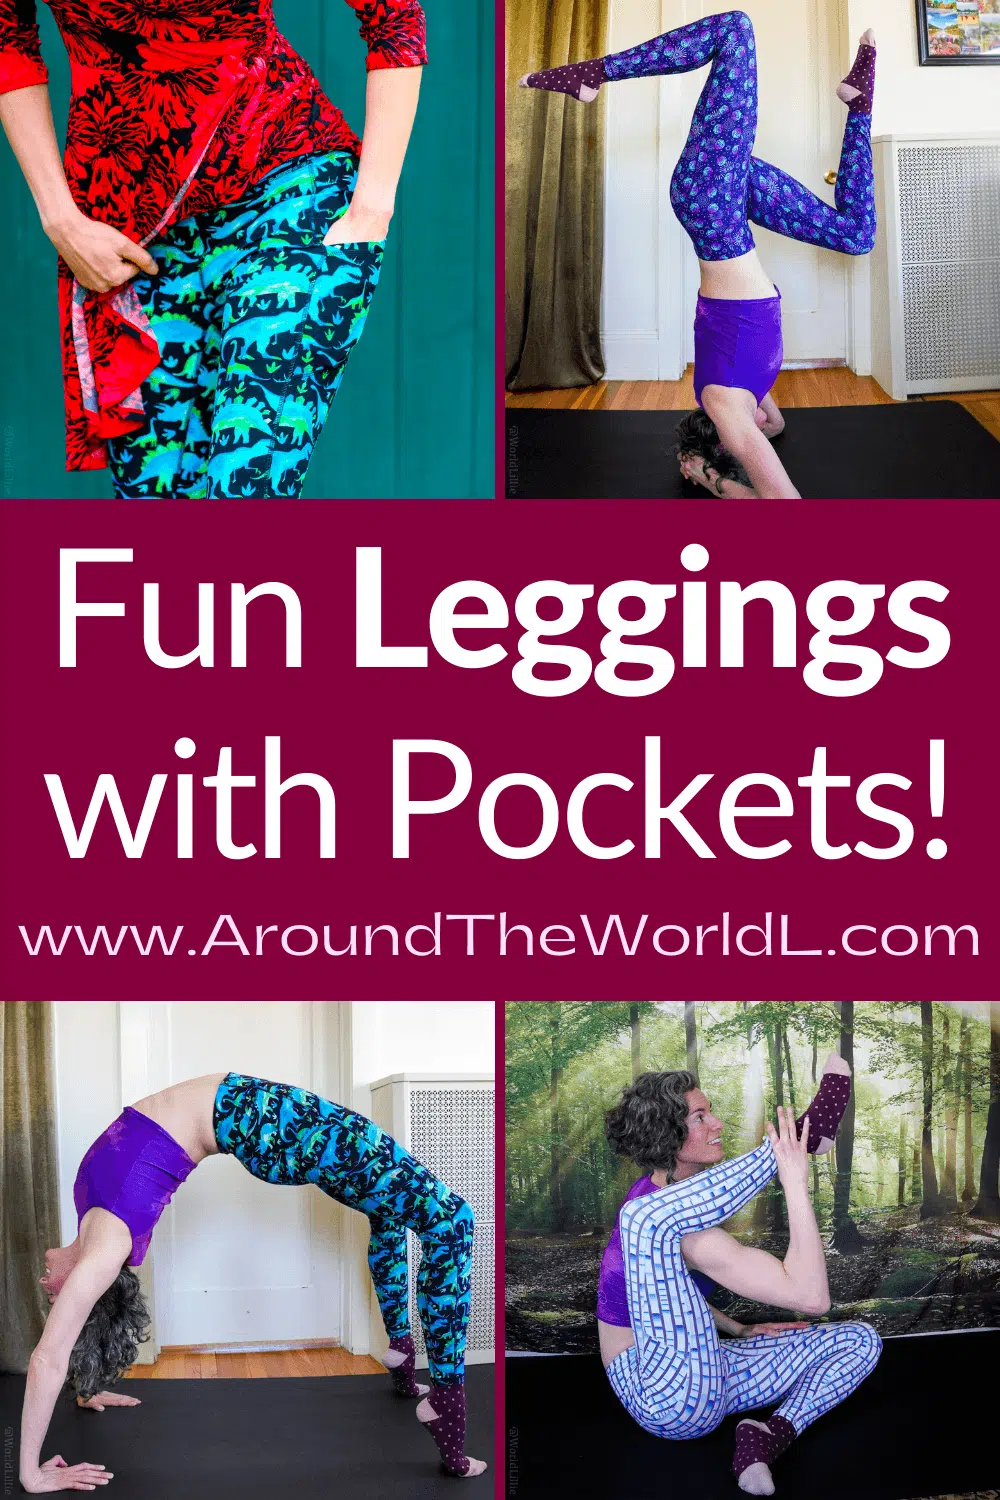 Fun leggings with pockets